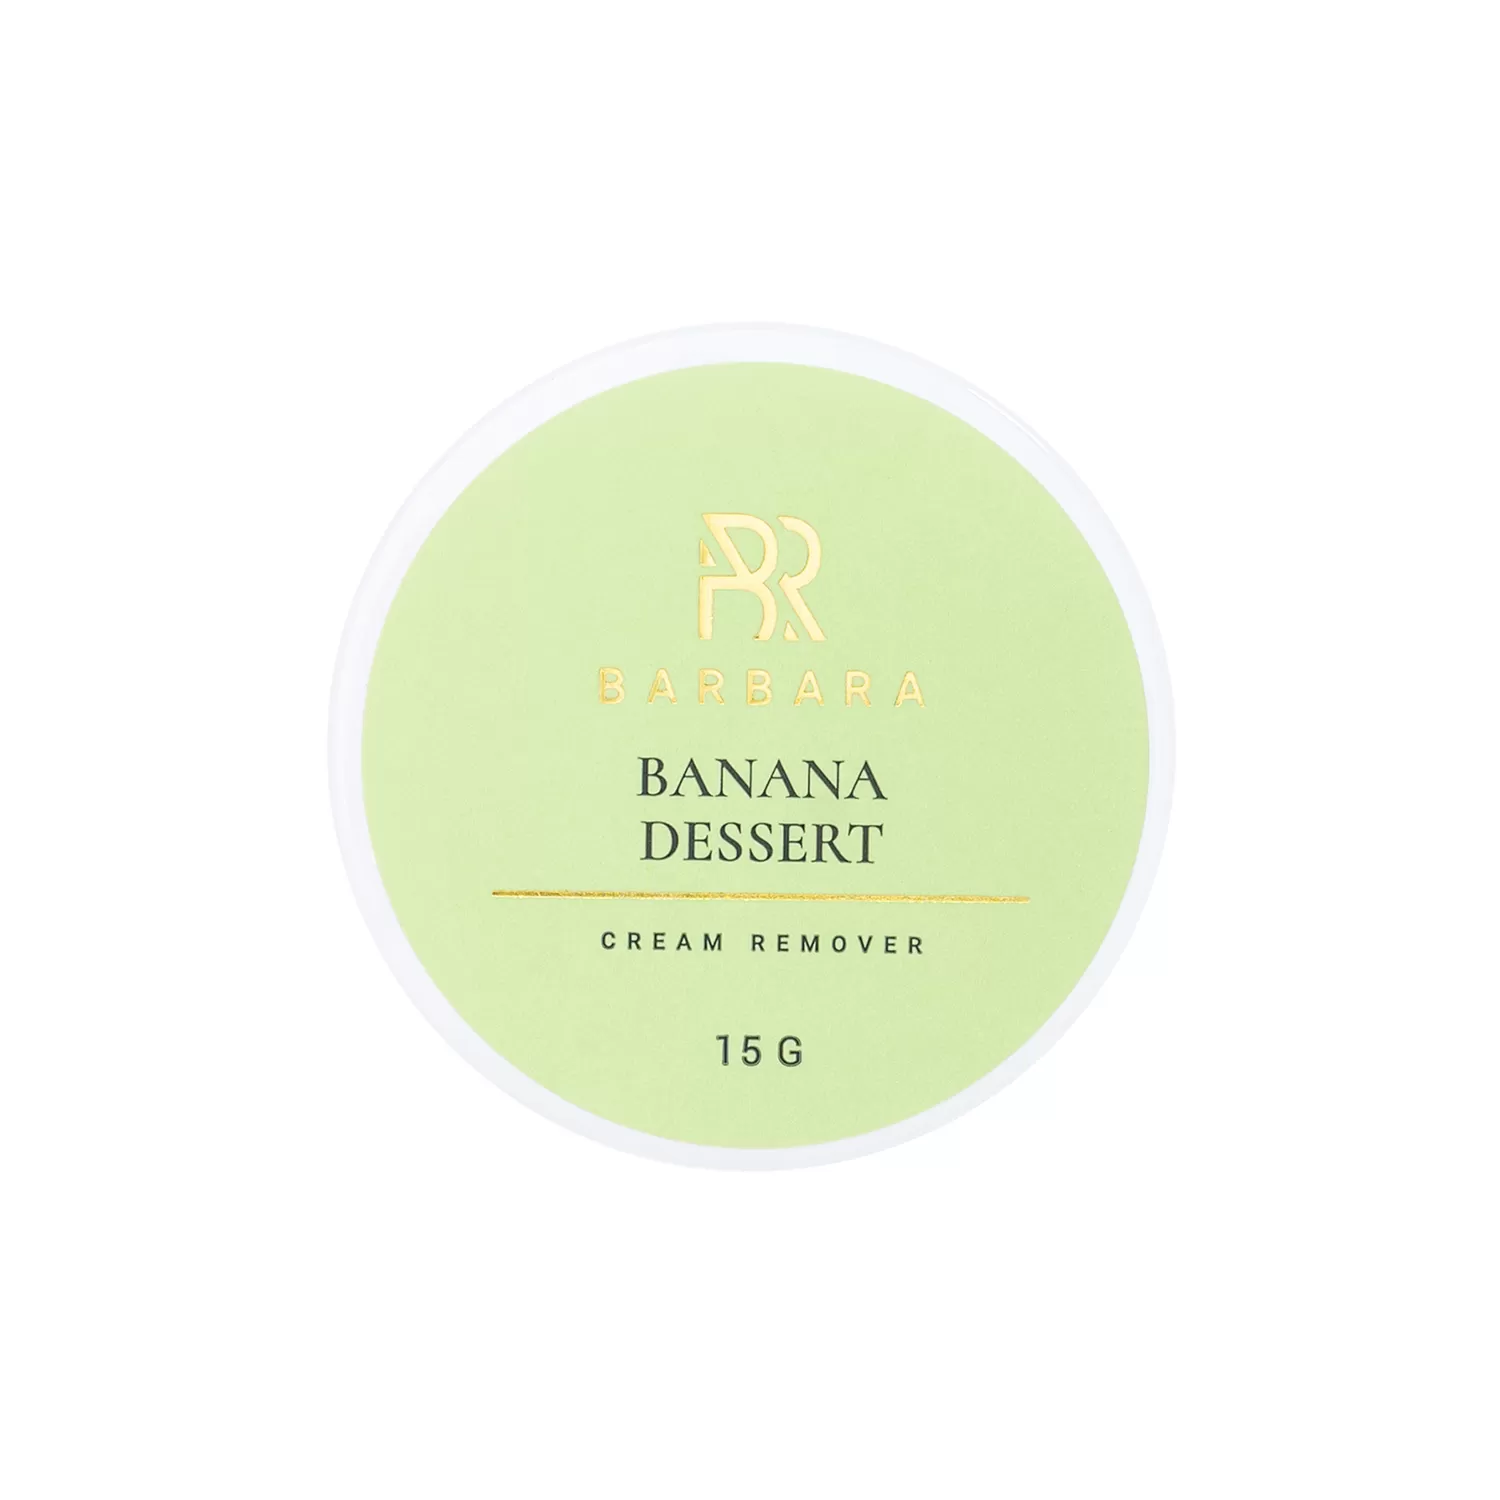 Produkt Barbara Creme Remover Banana Dessert Image